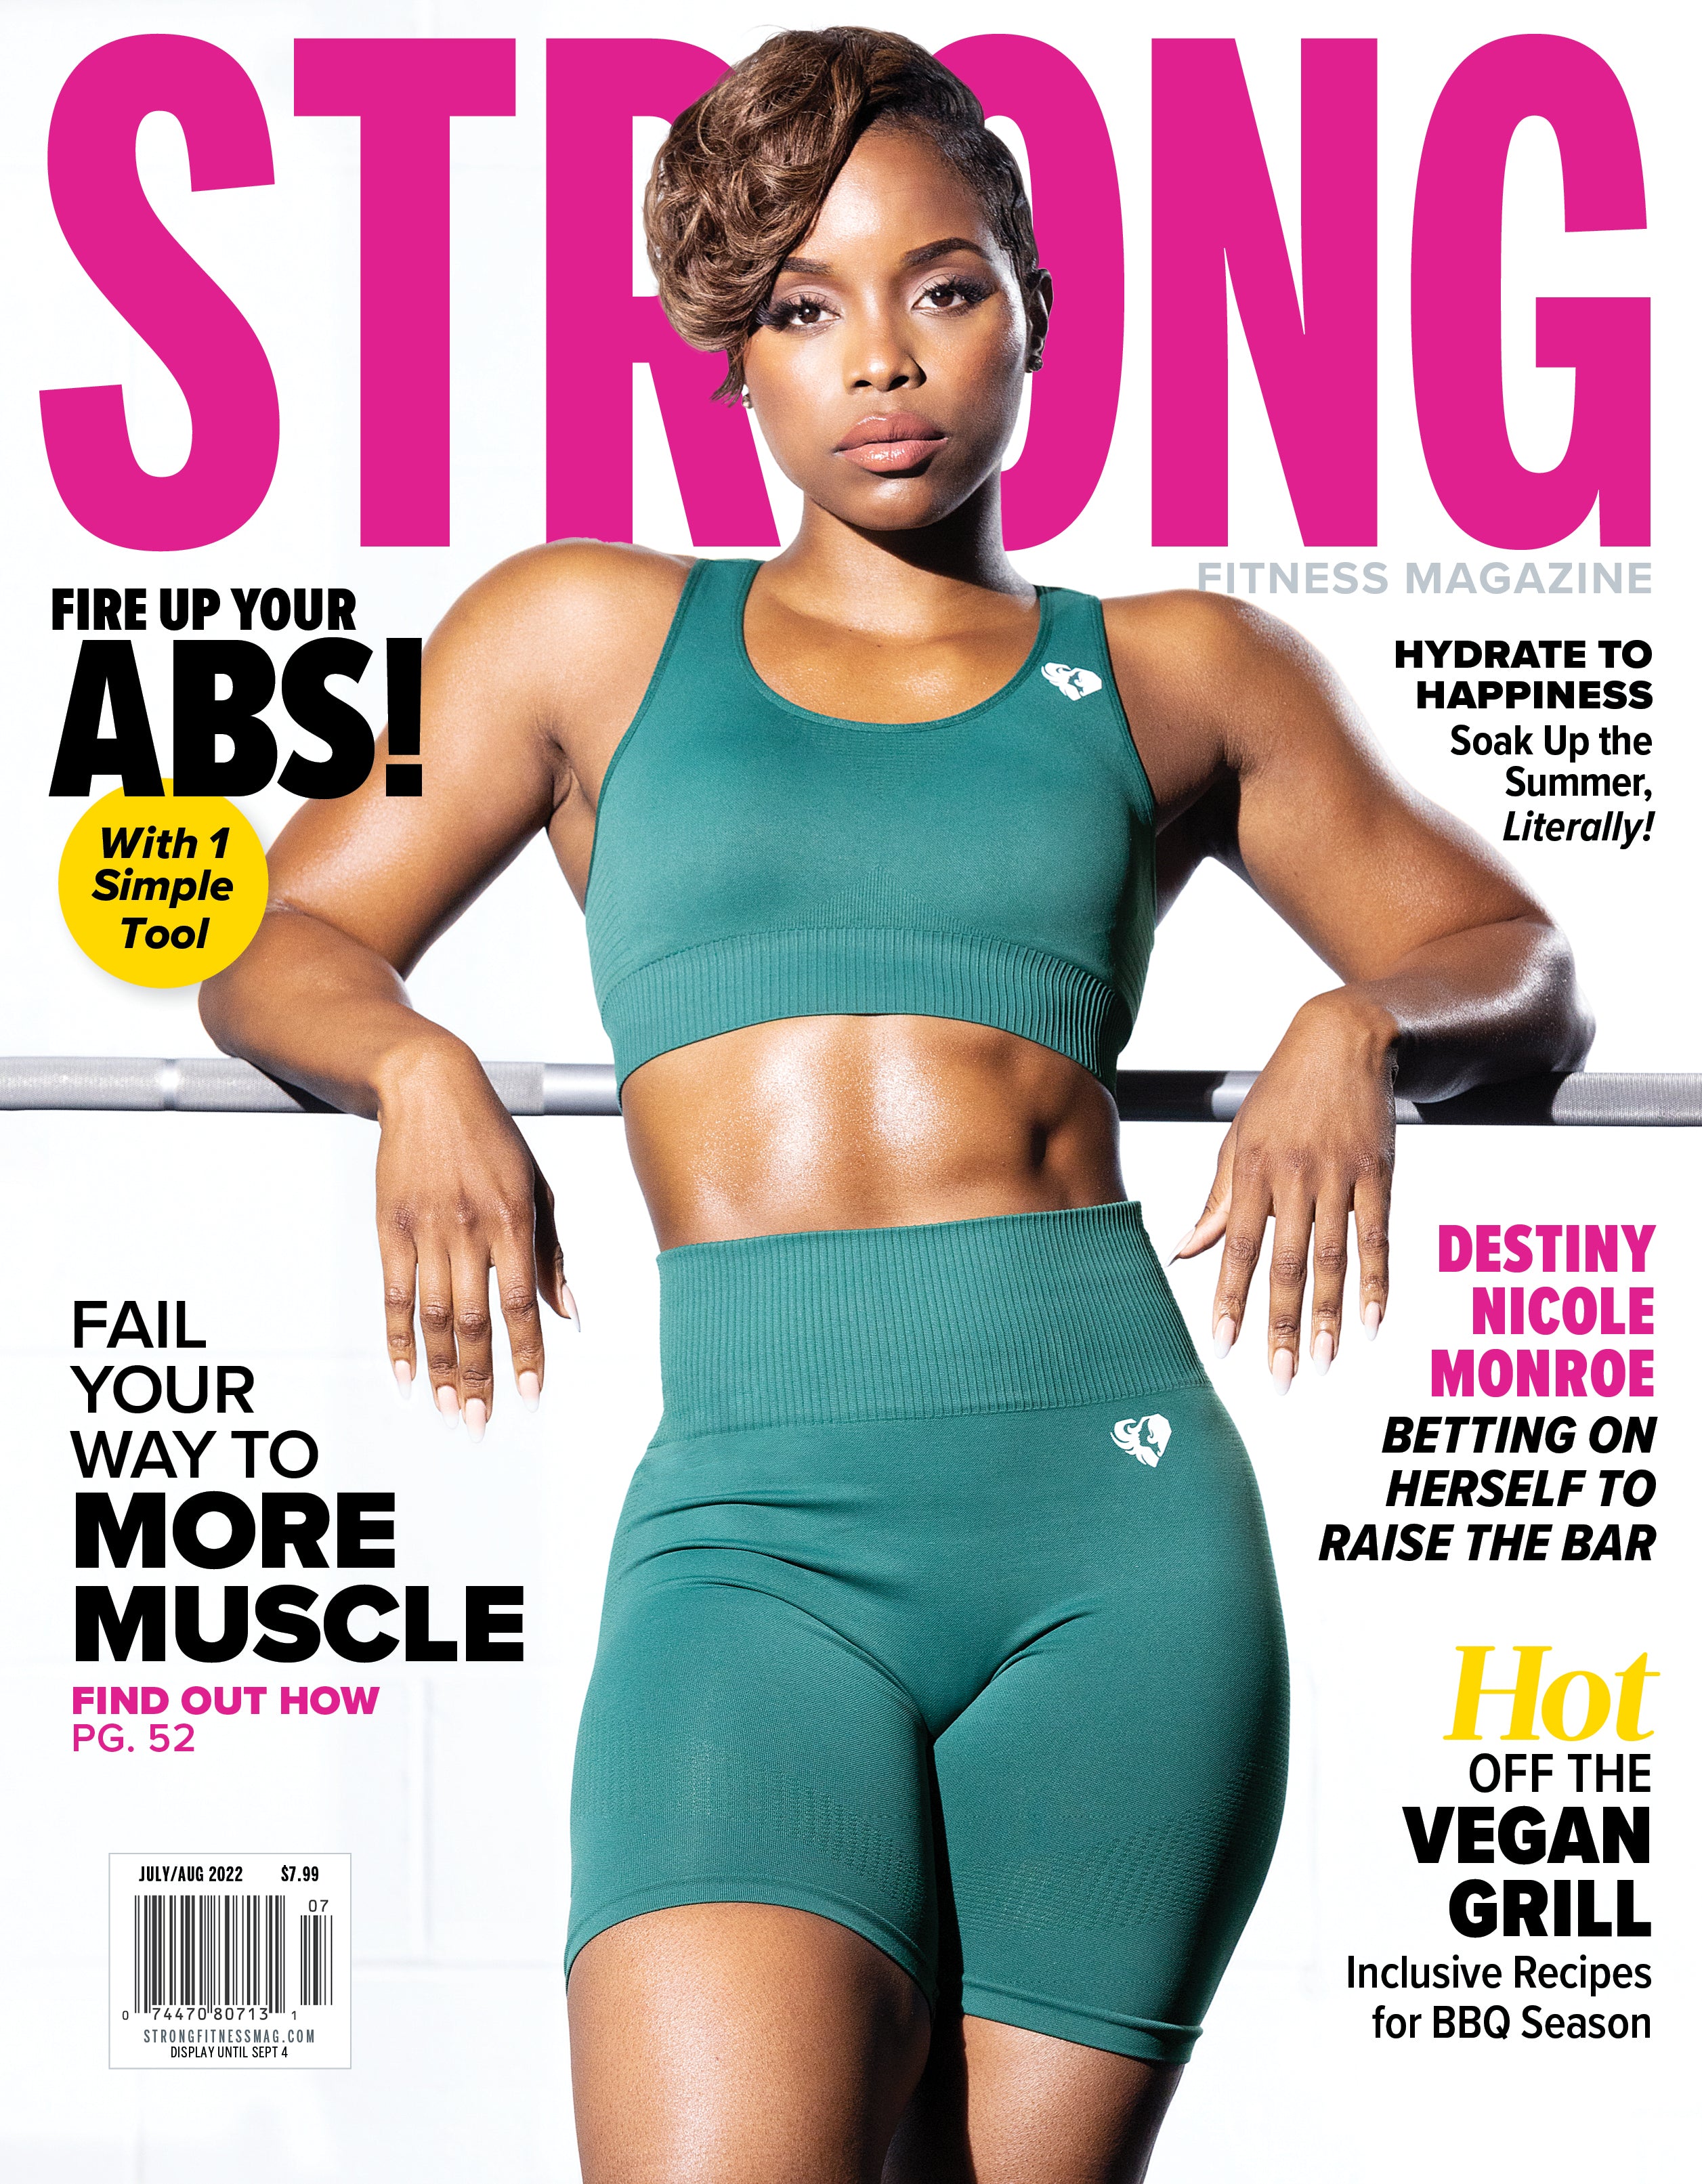 Women Fitness, Women Fitness International Magazine…